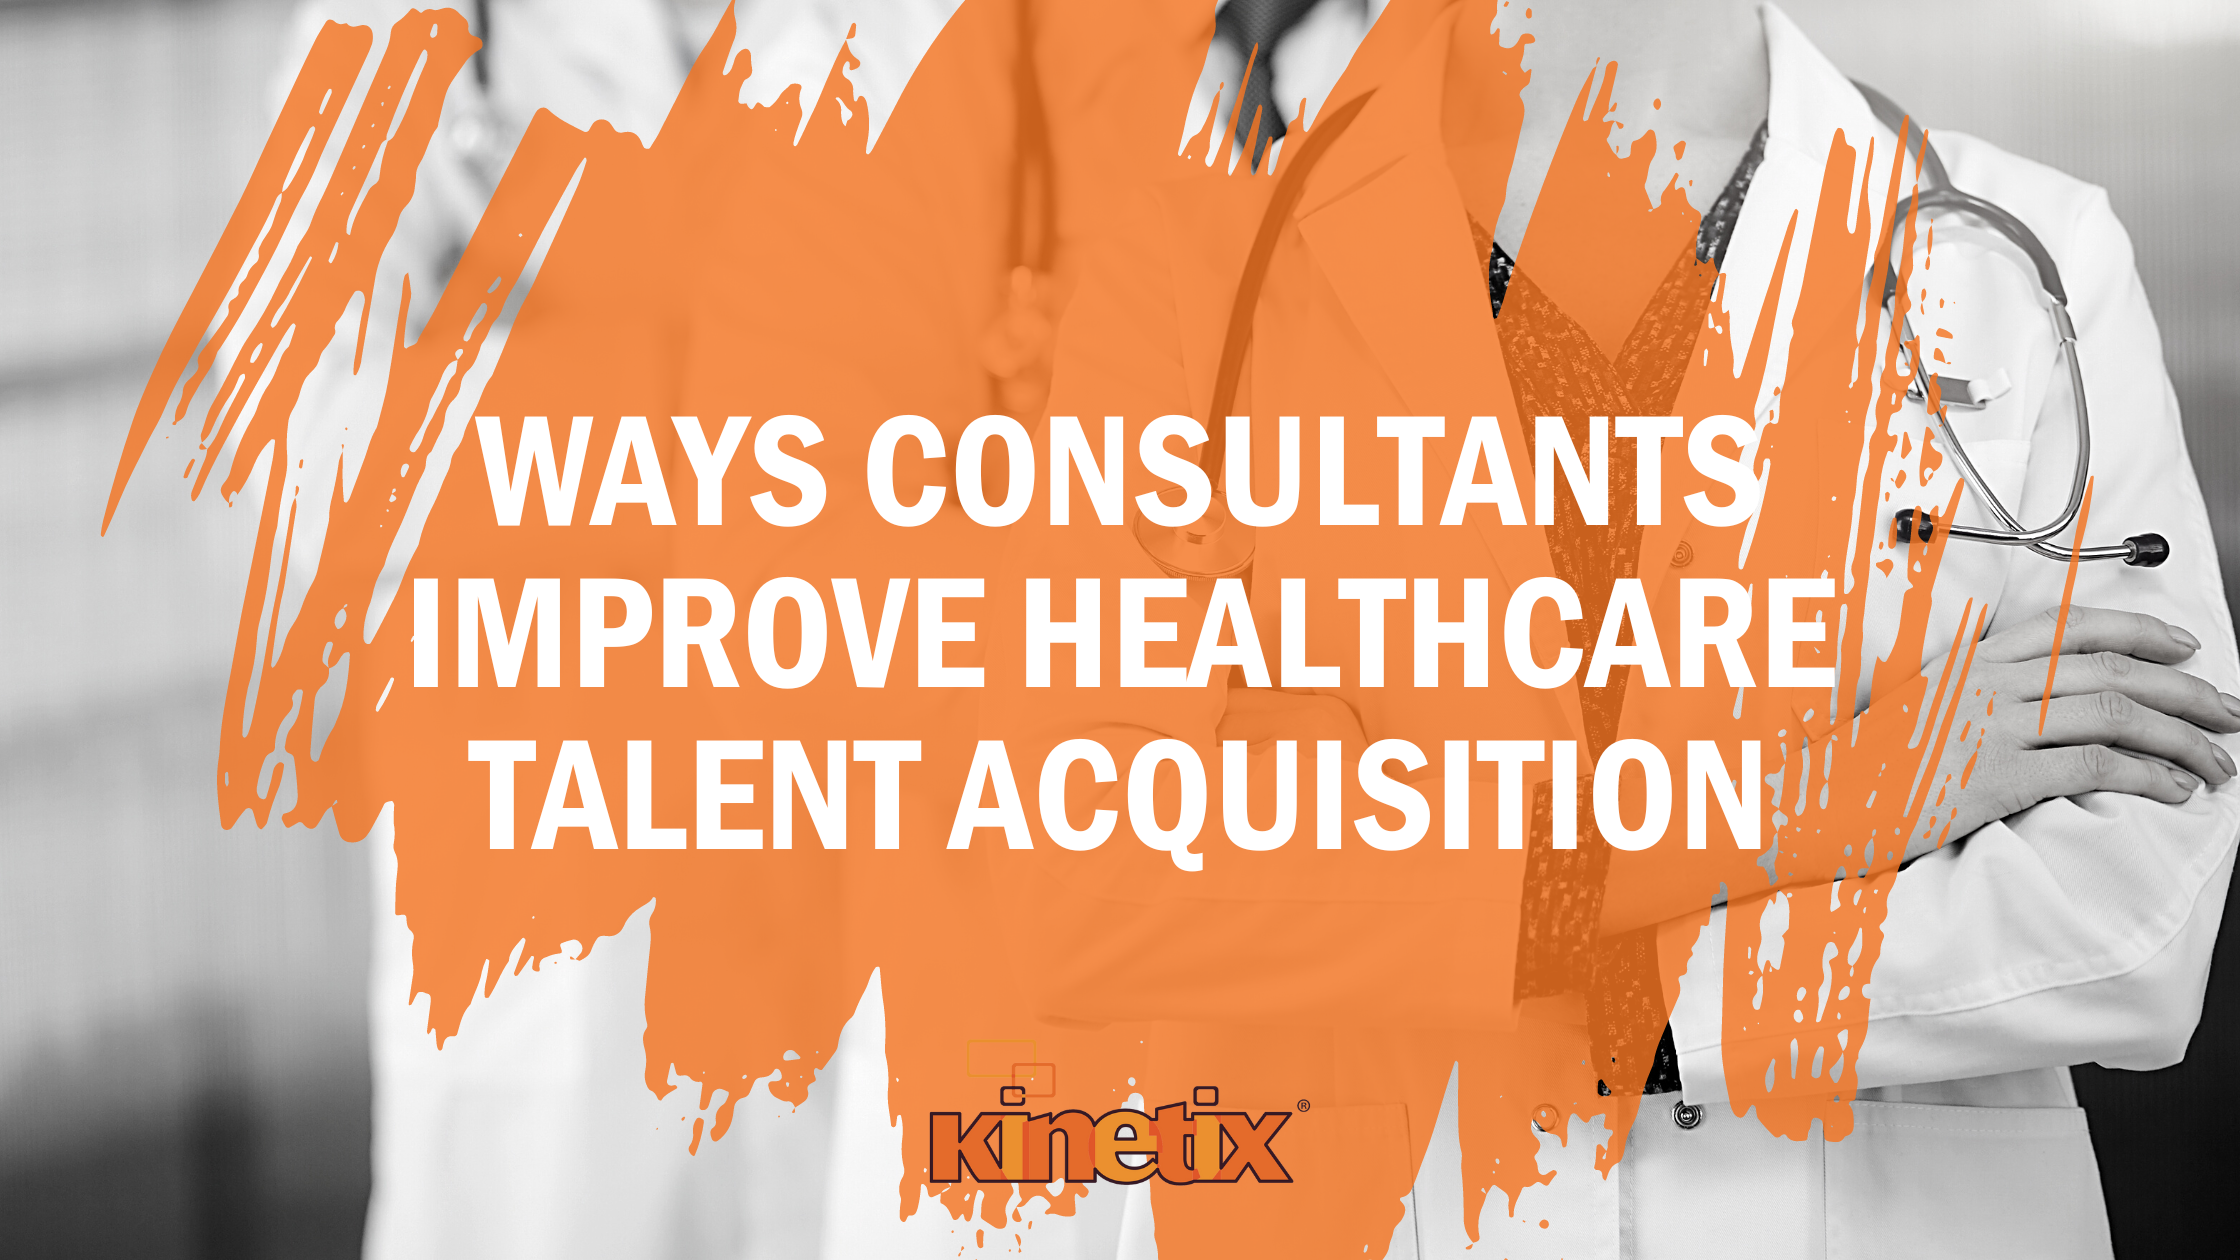 4 Ways Consultants Improve Healthcare Talent Acquisition